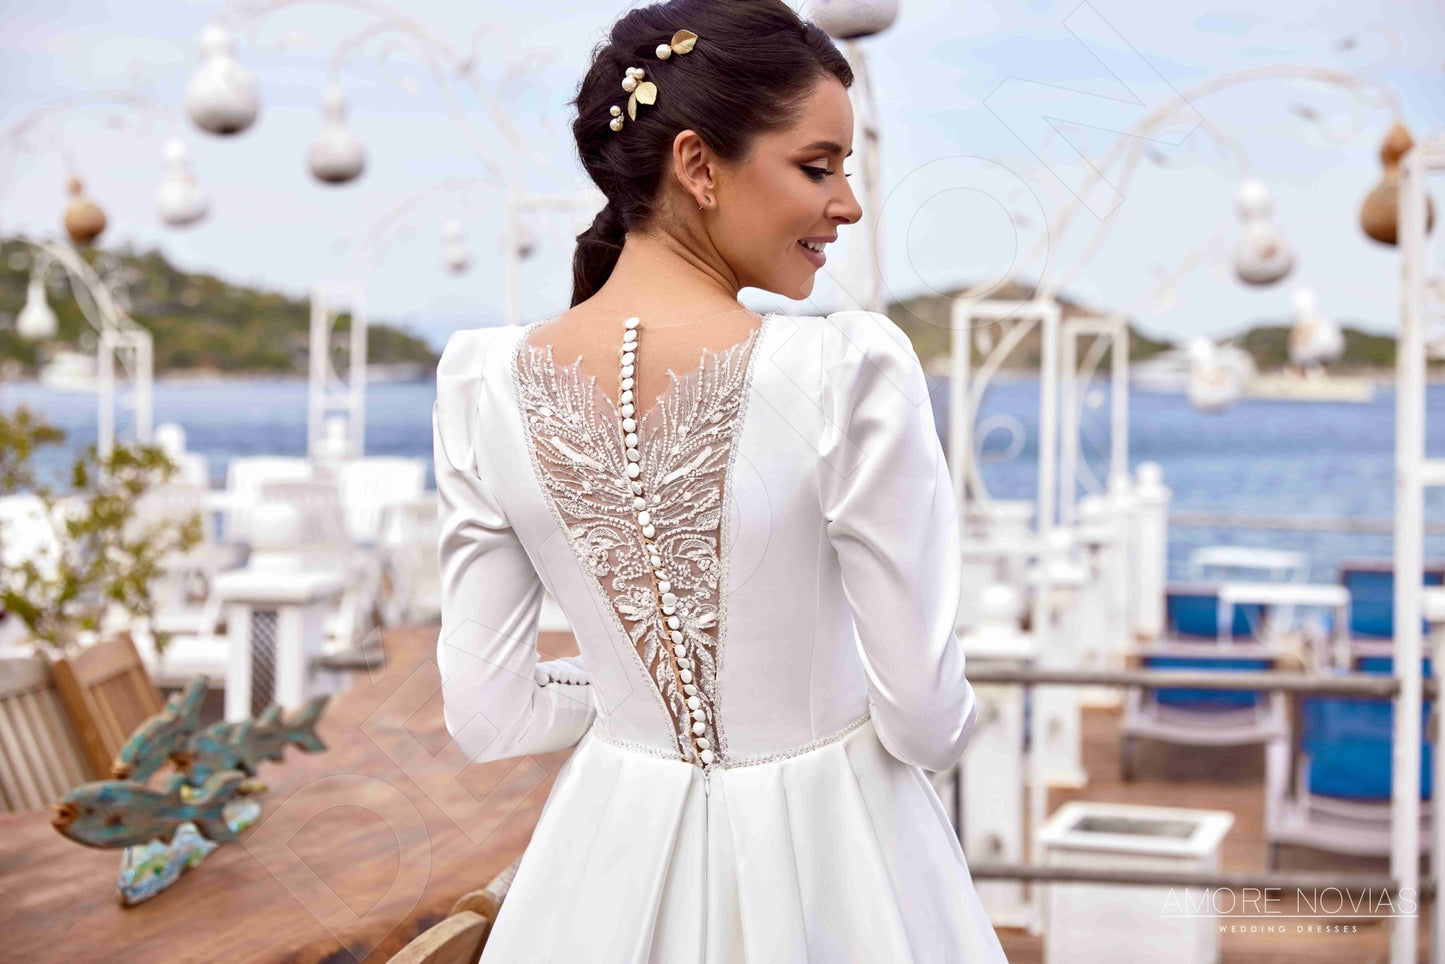 Dreama Full back A-line Long sleeve Wedding Dress 7